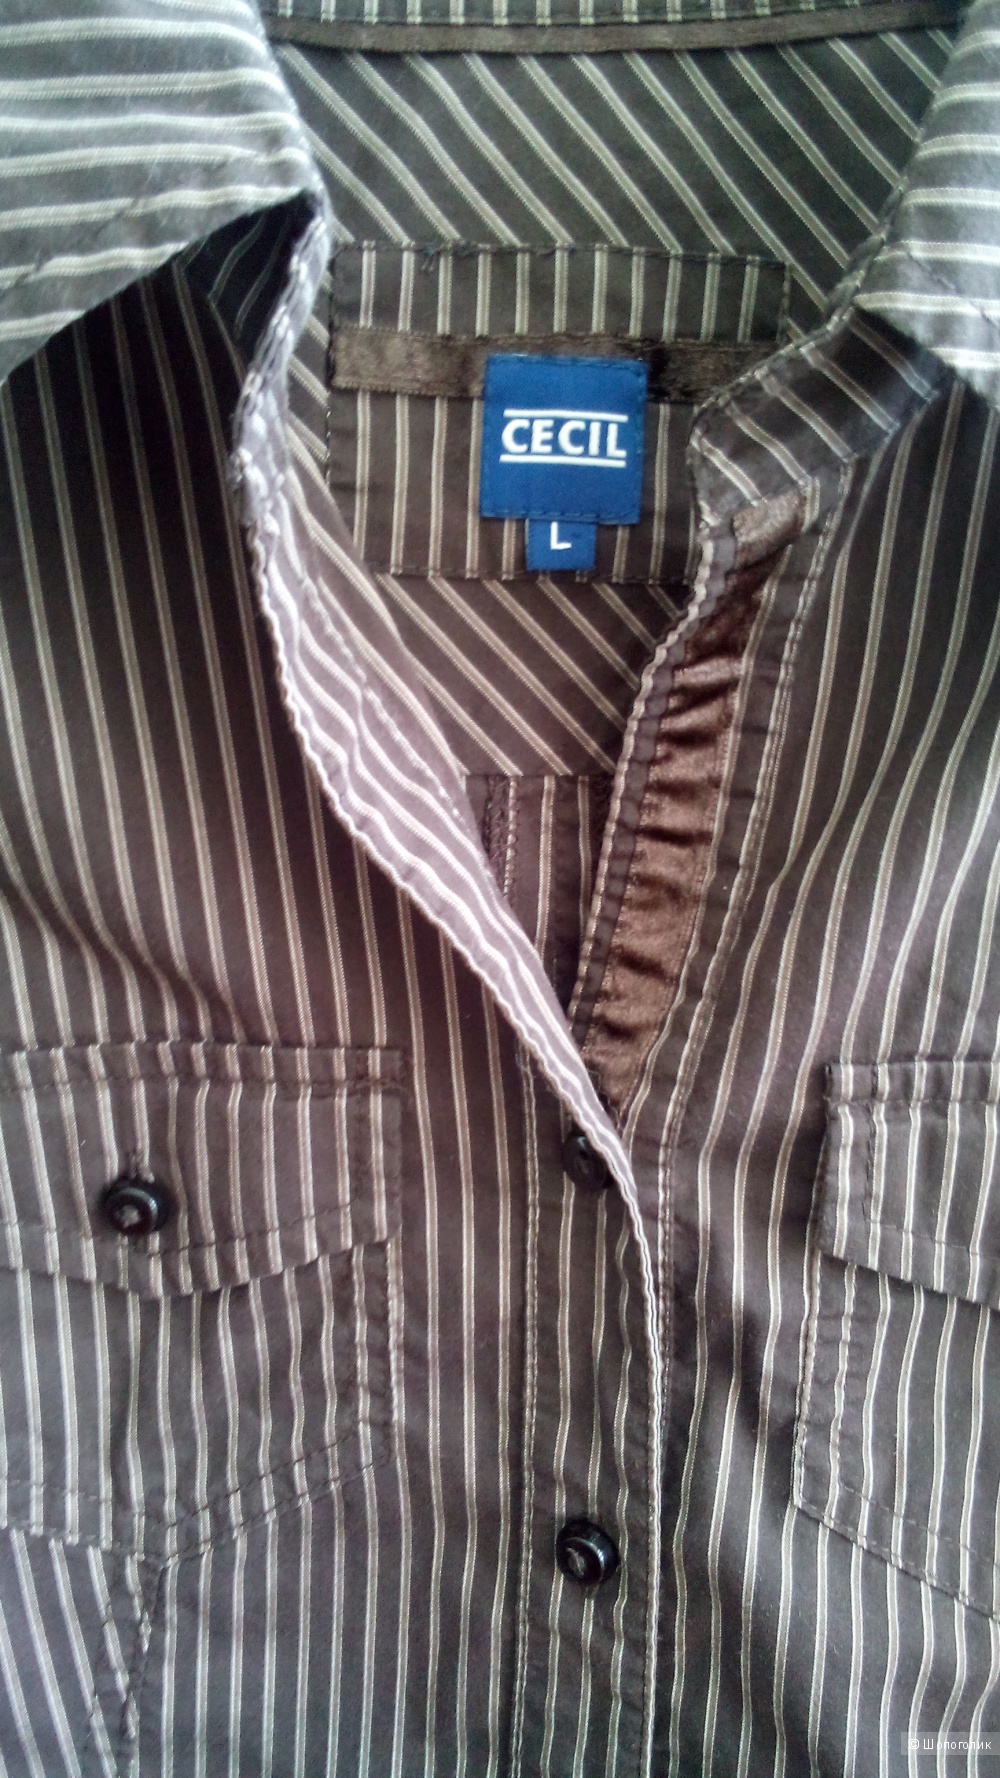 Блузка рубашка CECIL Германия разм L(48-50)